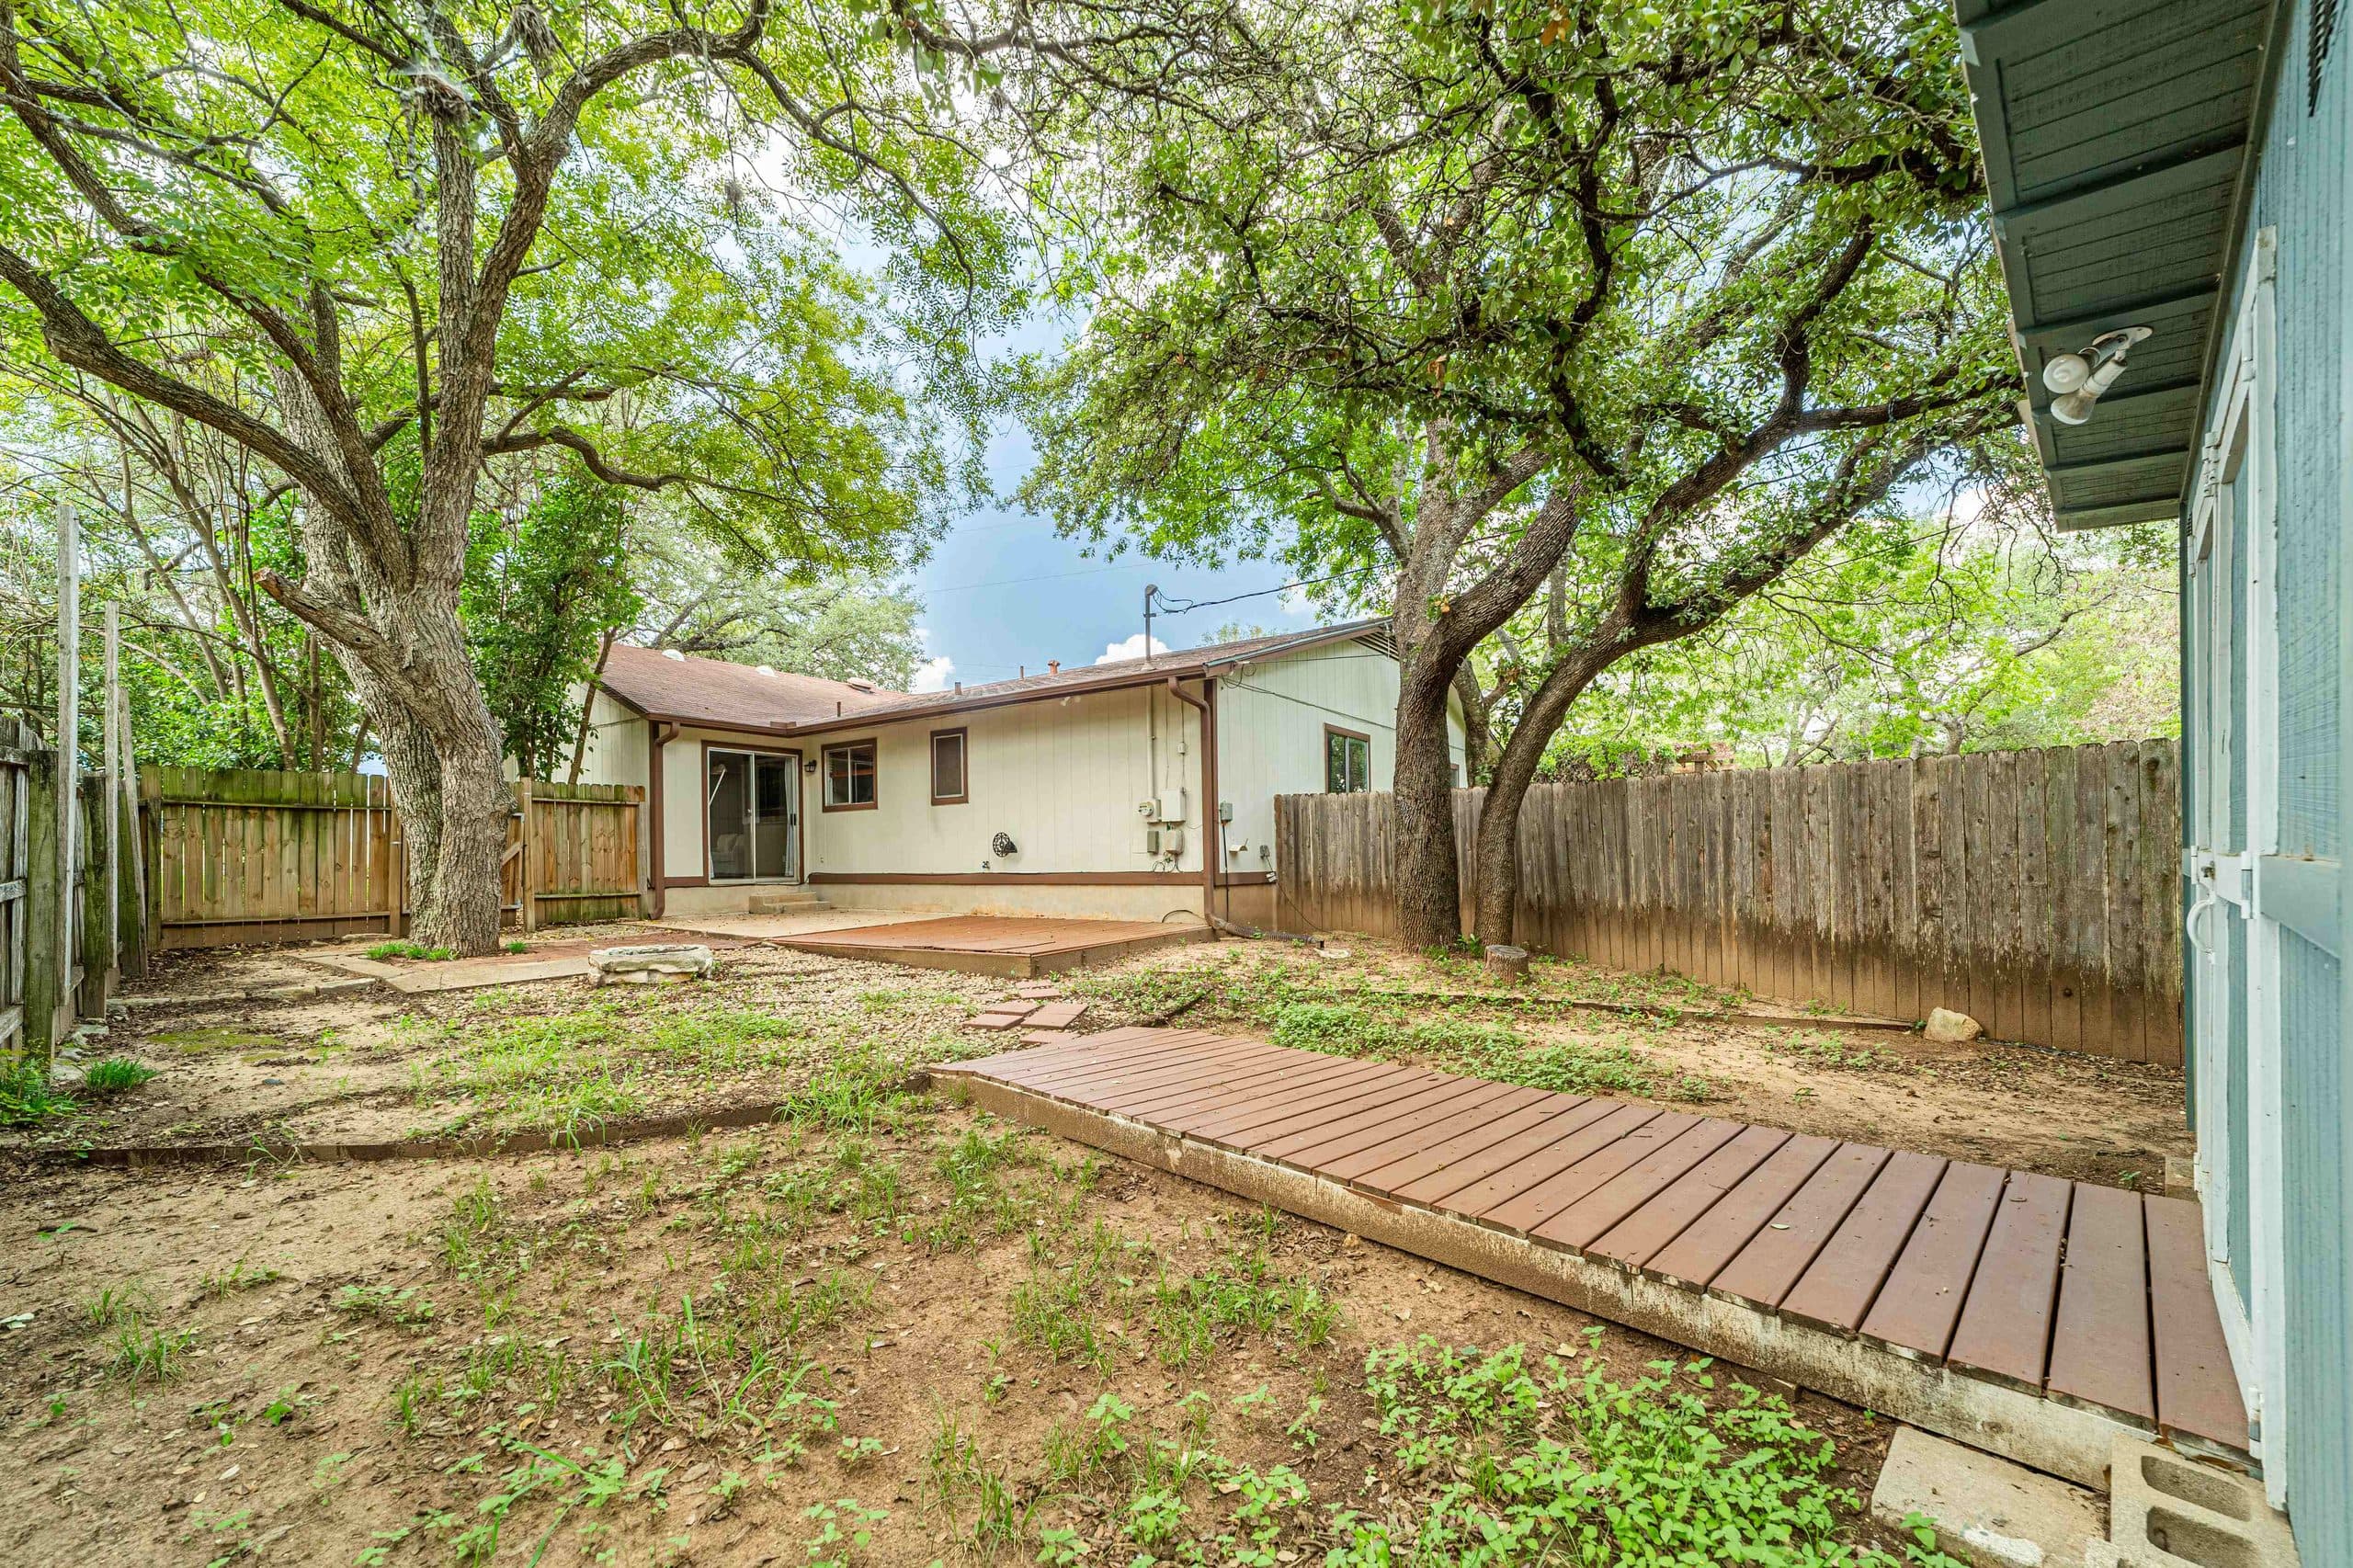 Photo 10 of #1510: North Austin at June Homes